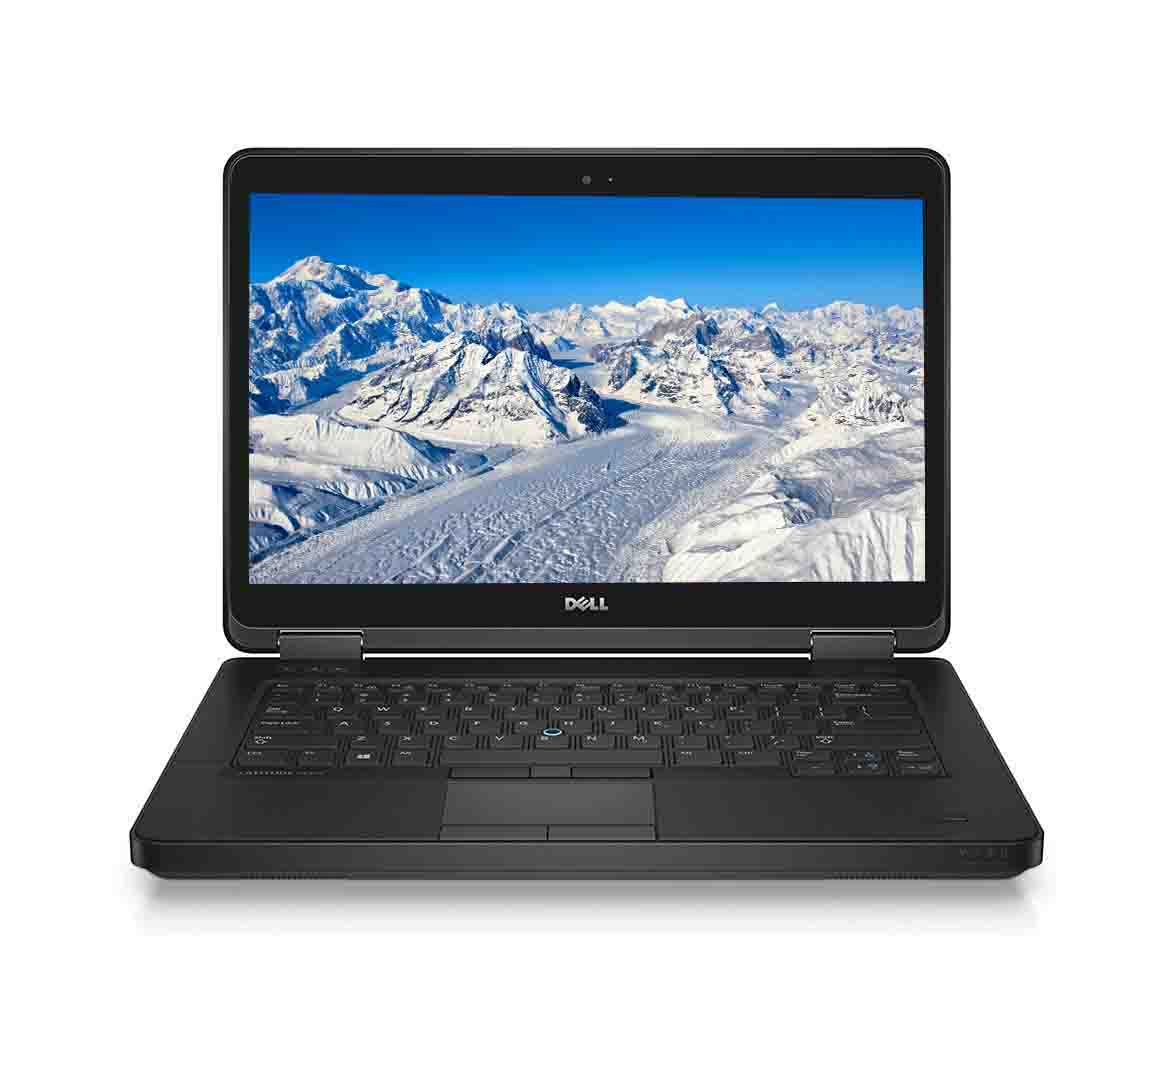 Dell Latitude 5440 Business Laptop, Intel Core i5-4th Generation CPU, 4GB RAM, 500GB HDD, 14 Inch Display, Windows 10 Pro, Refurbished Laptop